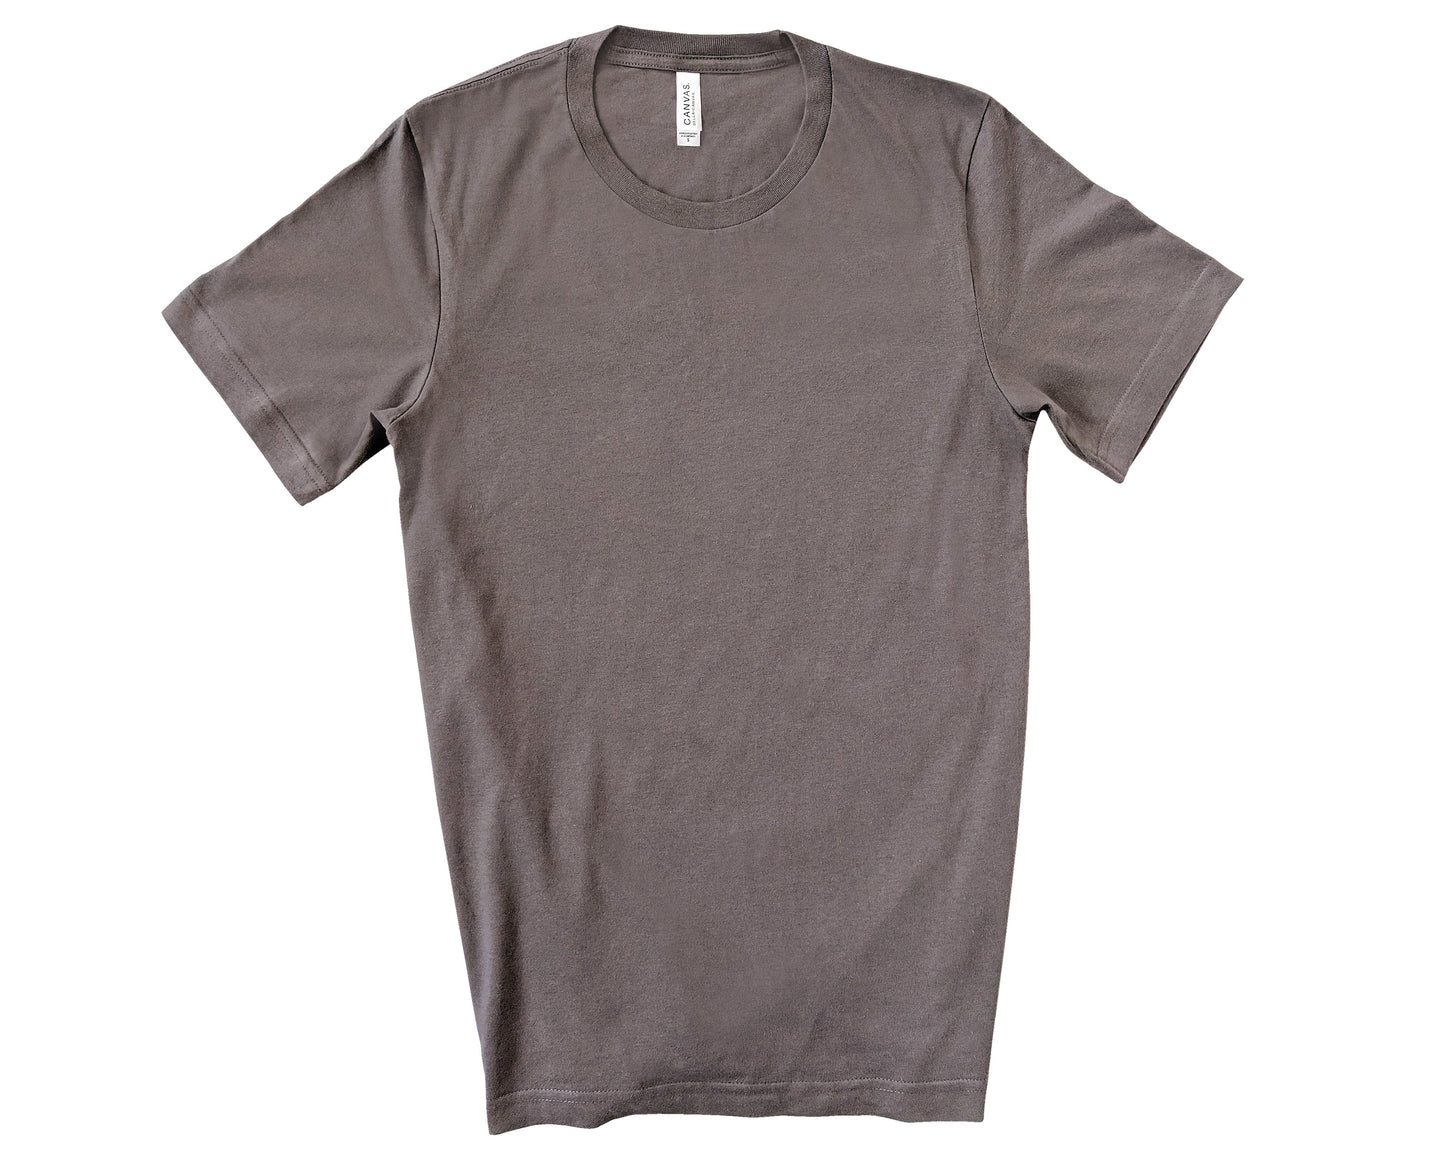 Living Testimony - Unisex Premium T-Shirt